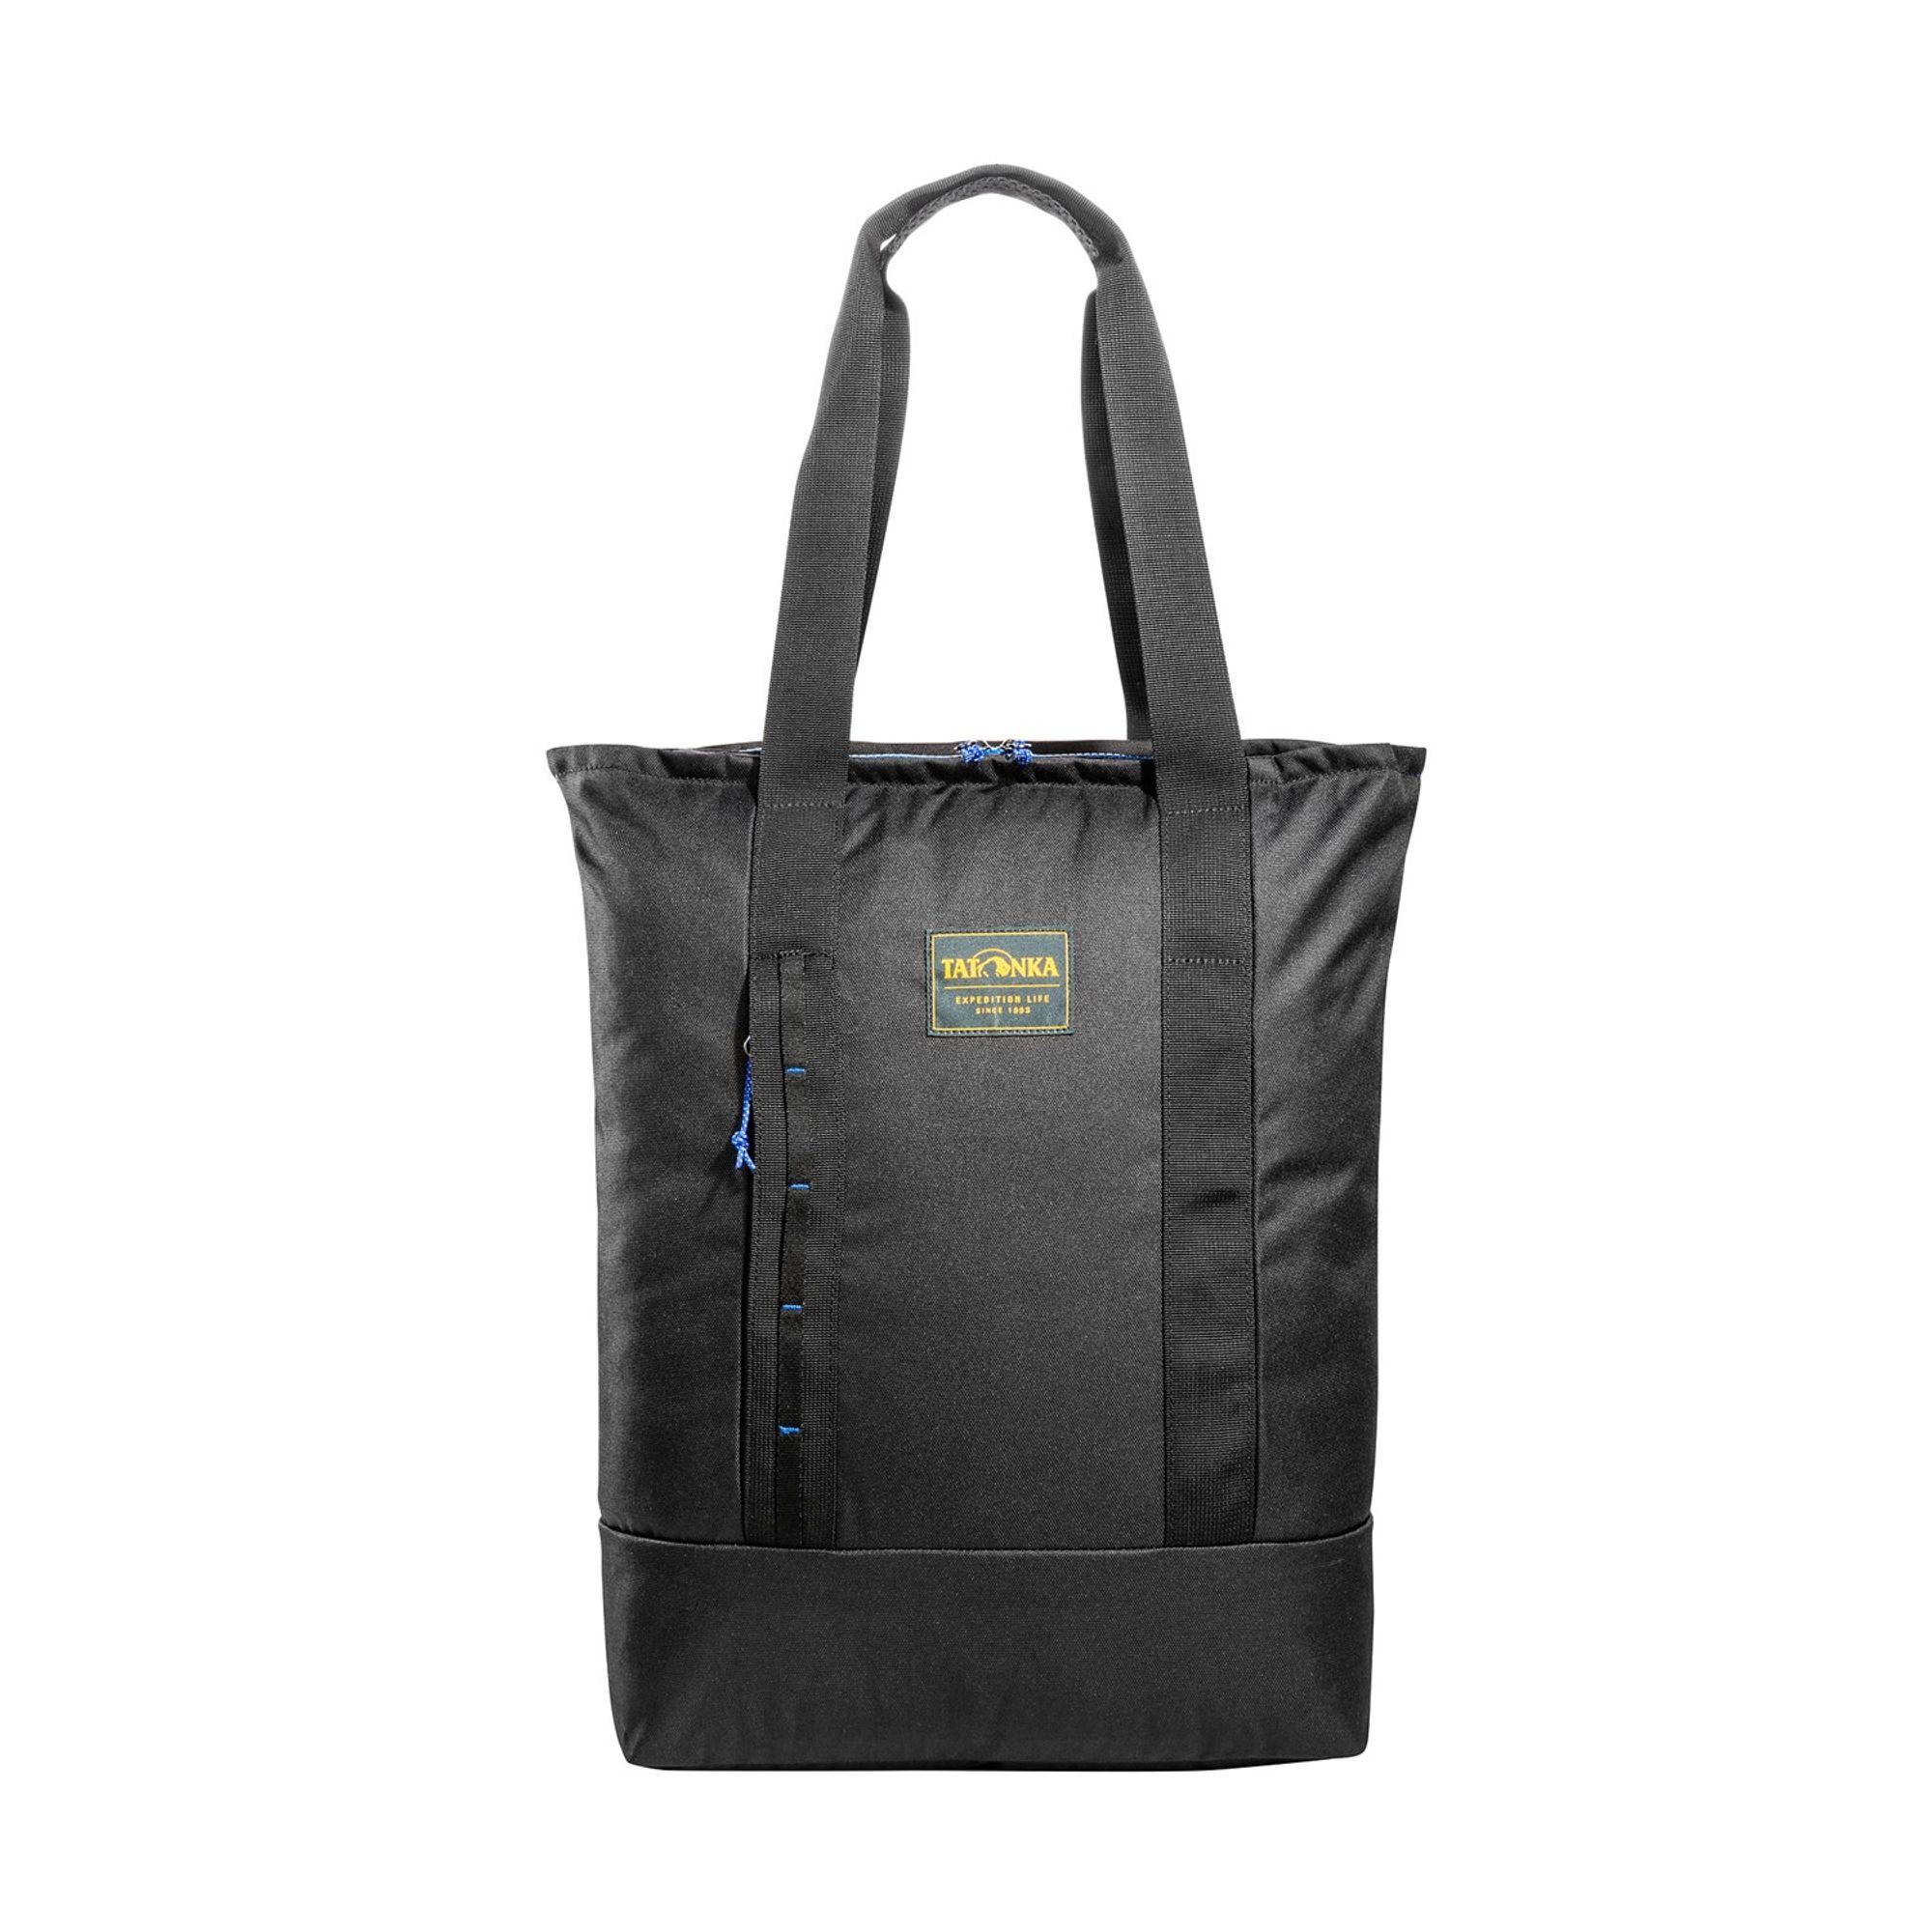 Рюкзак Tatonka City Stroller 43 cm Laptopfach, черный рюкзак tatonka city rolltop 50 cm laptopfach черный